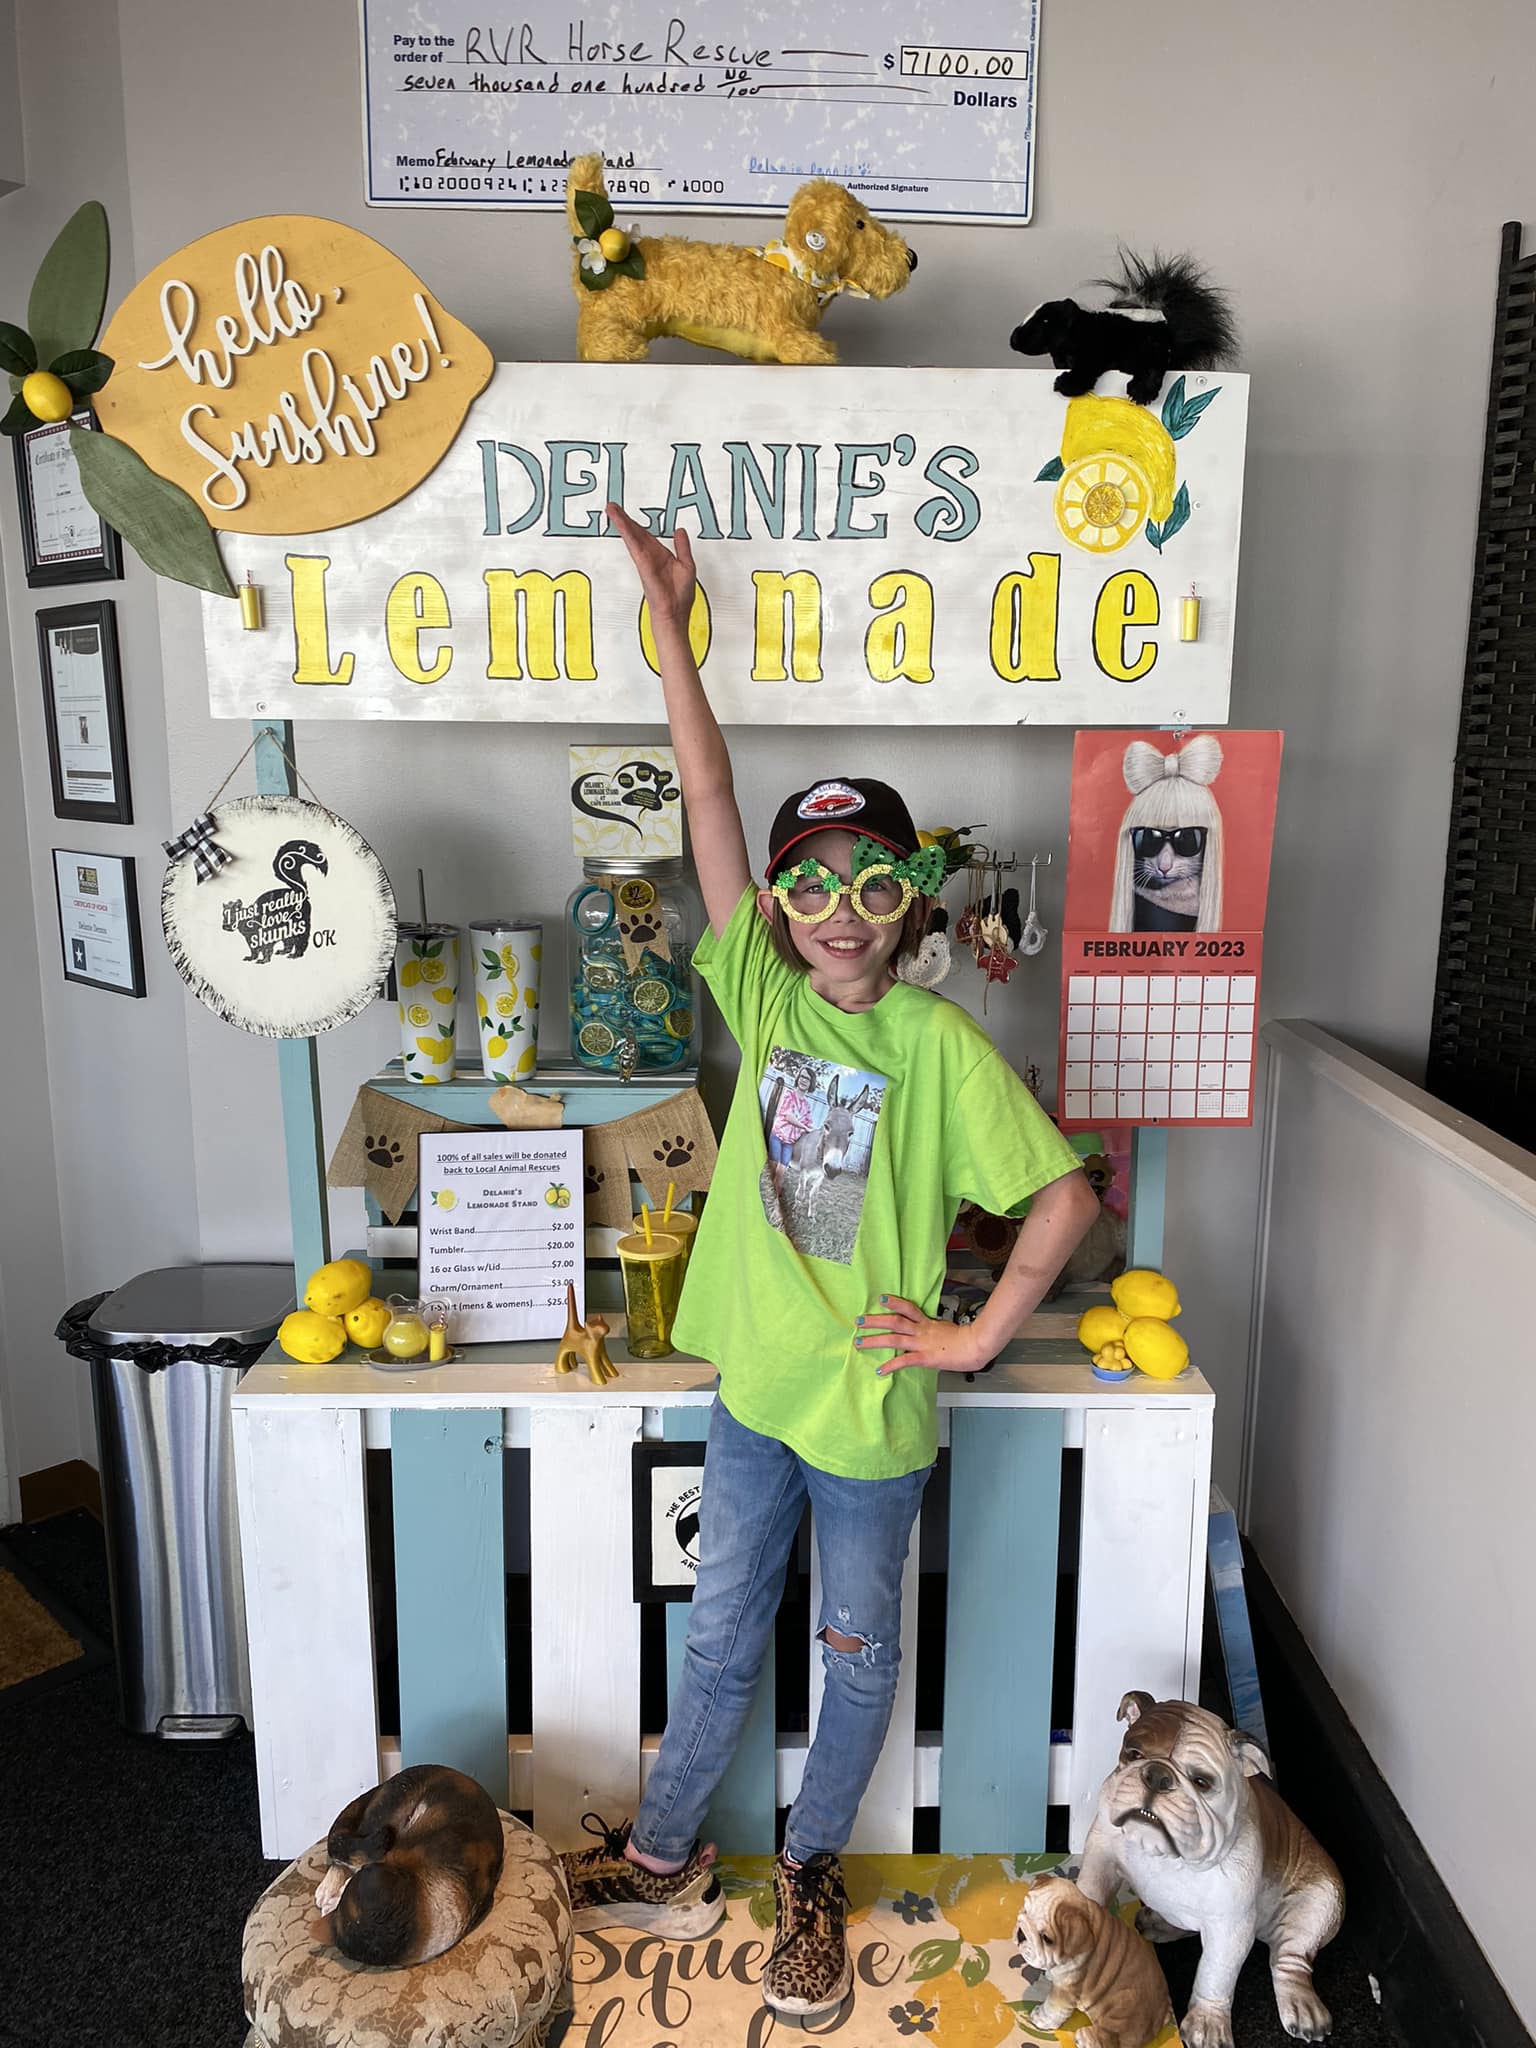 Delanie Dennis standing by her lemonade stand.